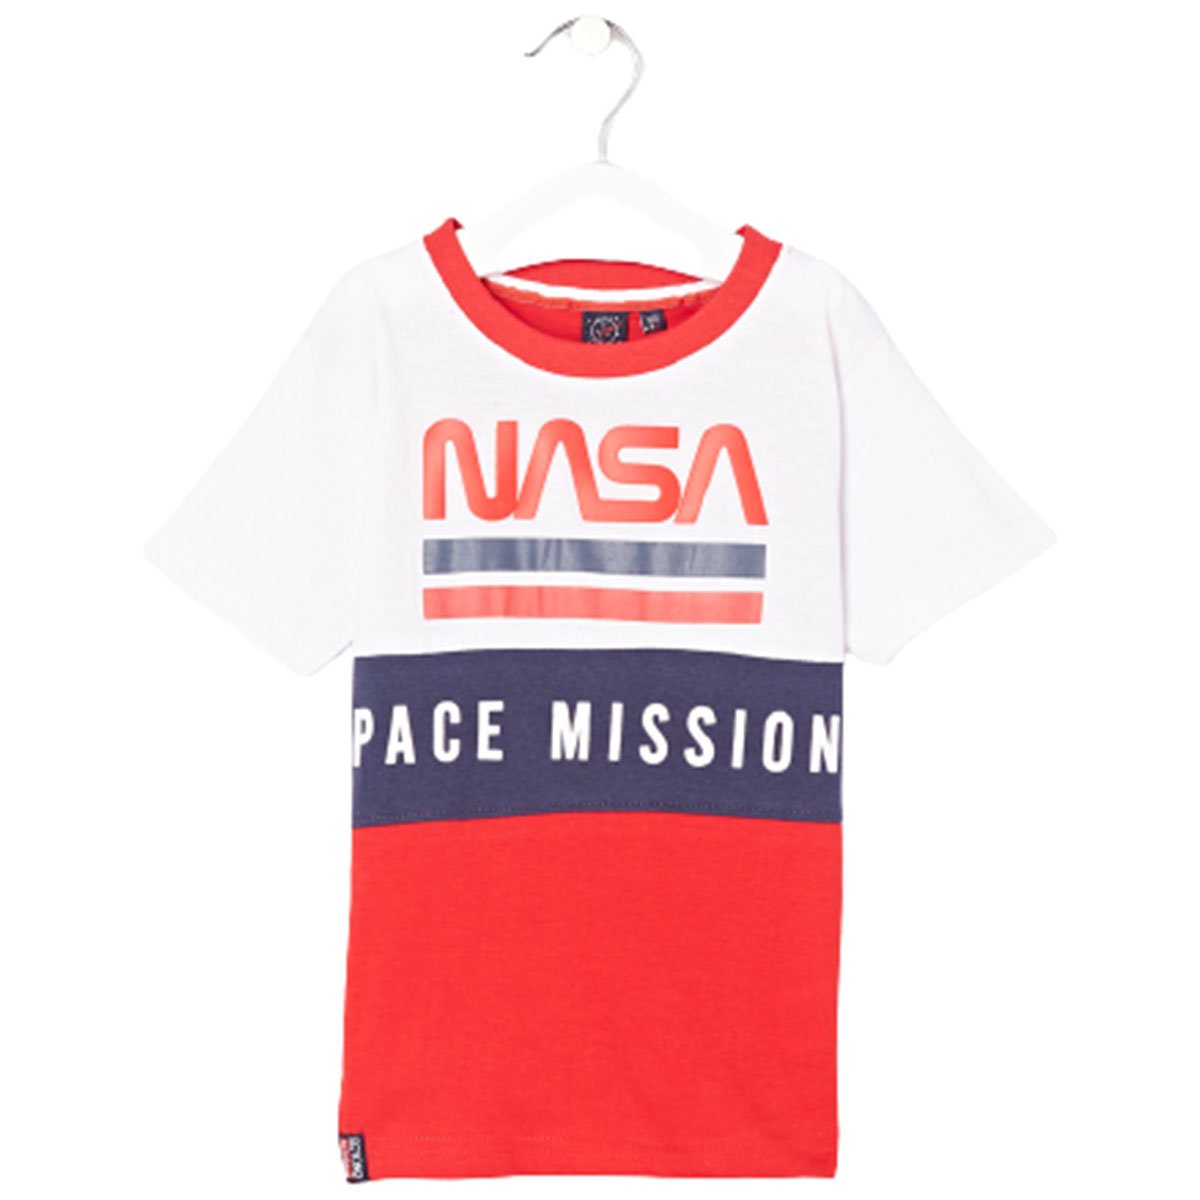 TEE SHIRT NASA SPACE MISSION